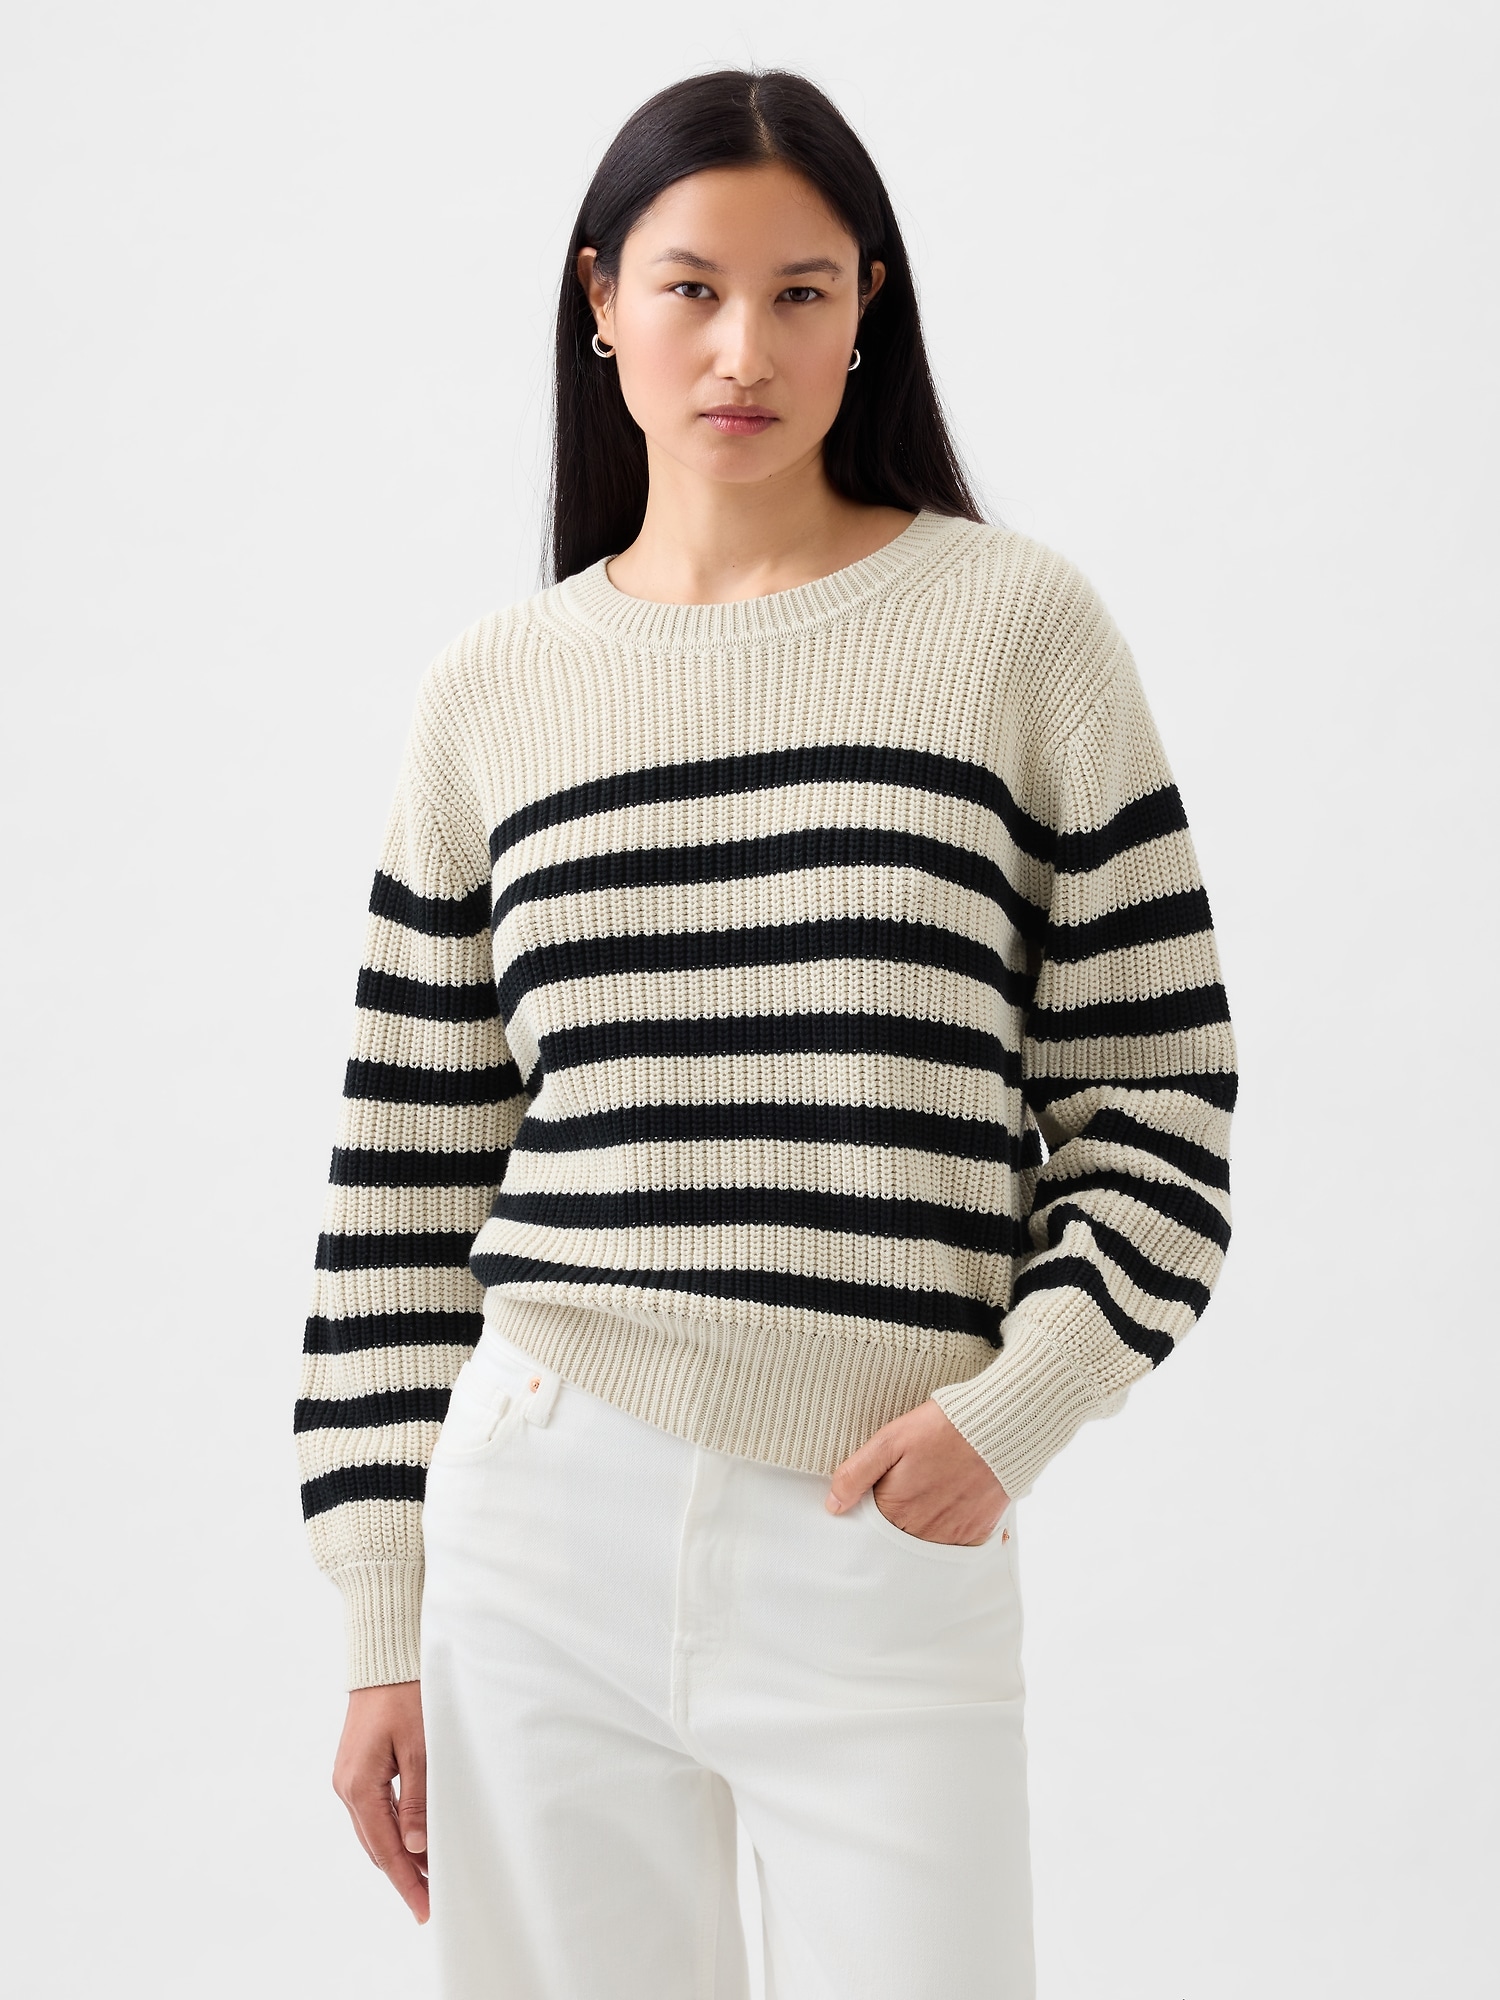 Shaker-Stitch Crewneck Sweater